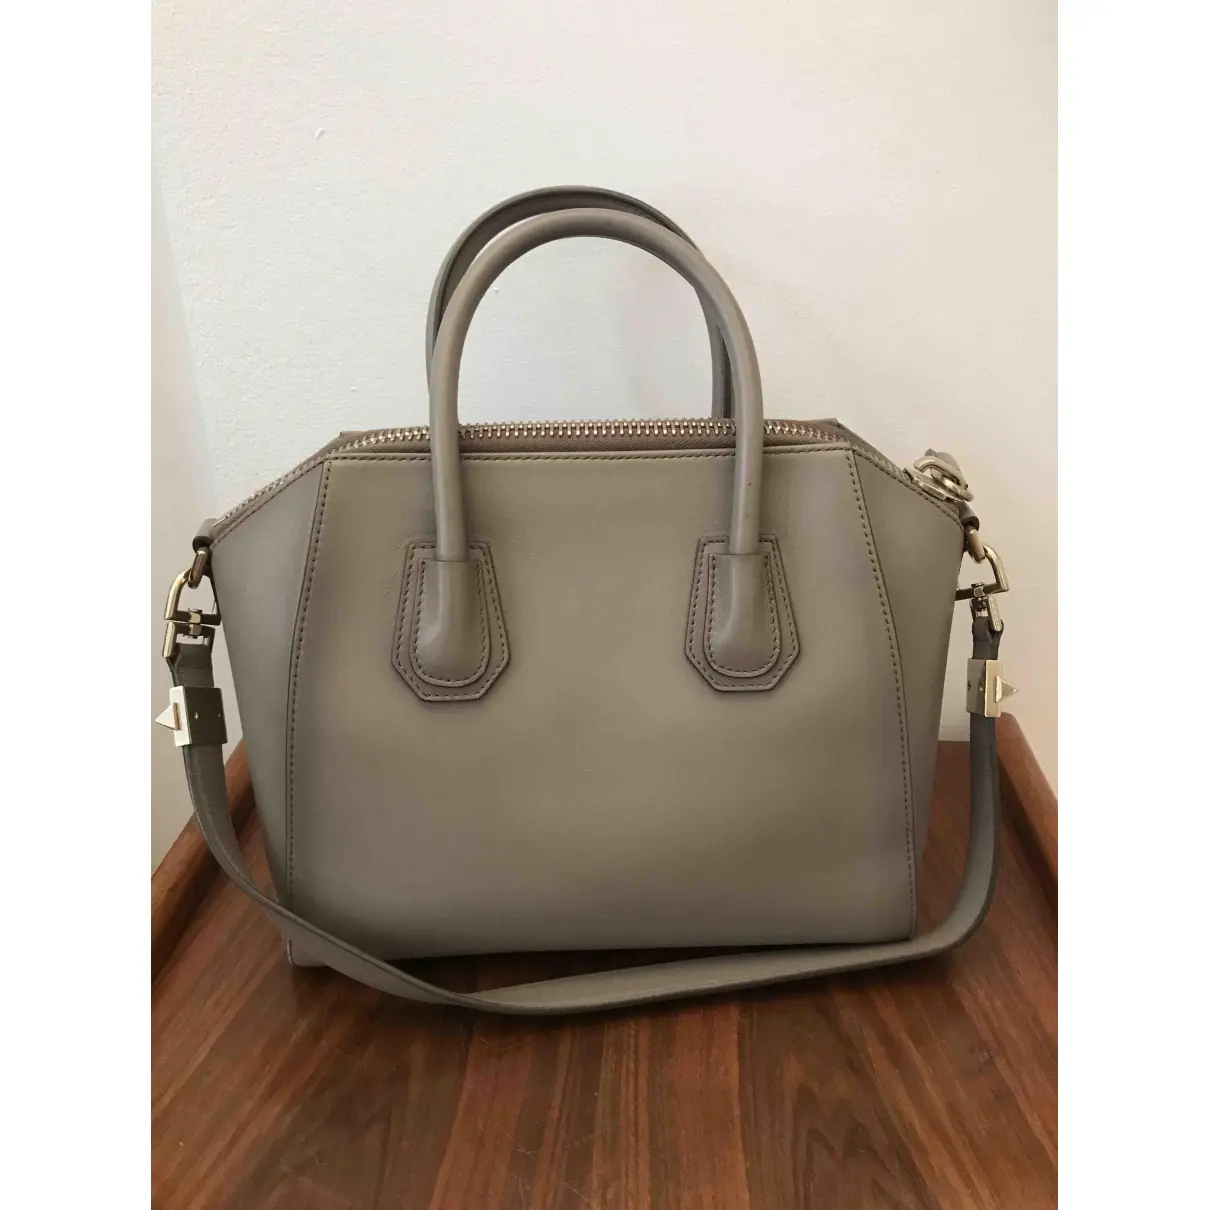 Buy Givenchy Antigona leather handbag online